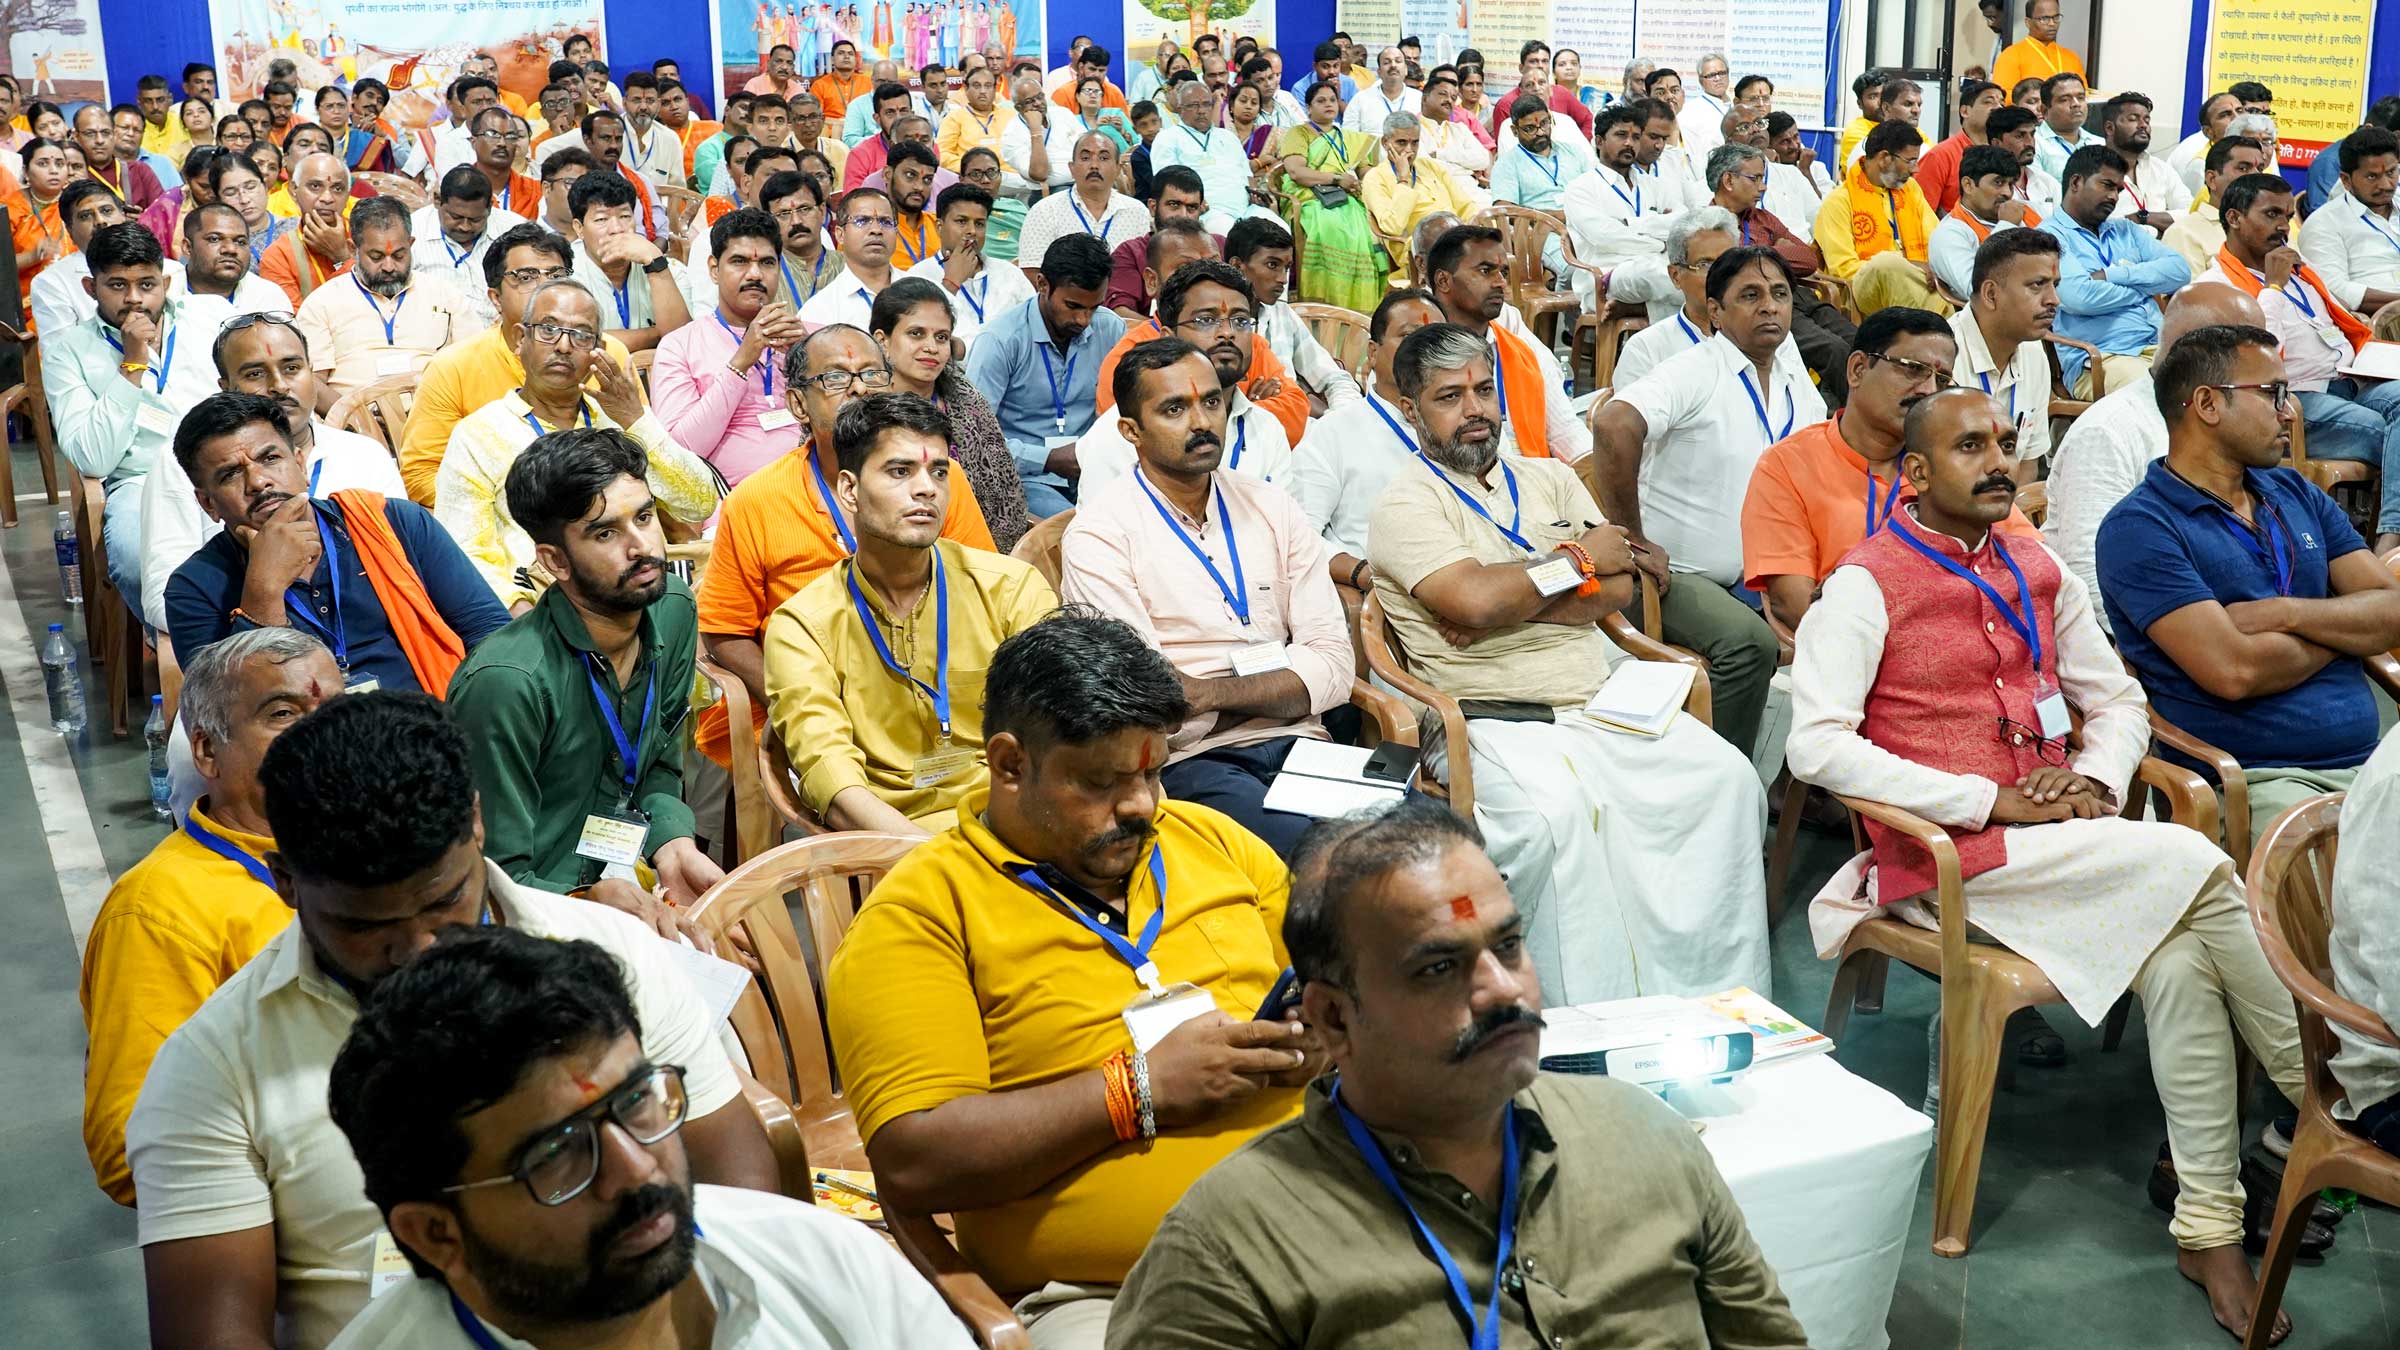 Devout Hindus listening intently to the Speakers in the 'Vaishvik Hindu Rashtra Mahotsav'